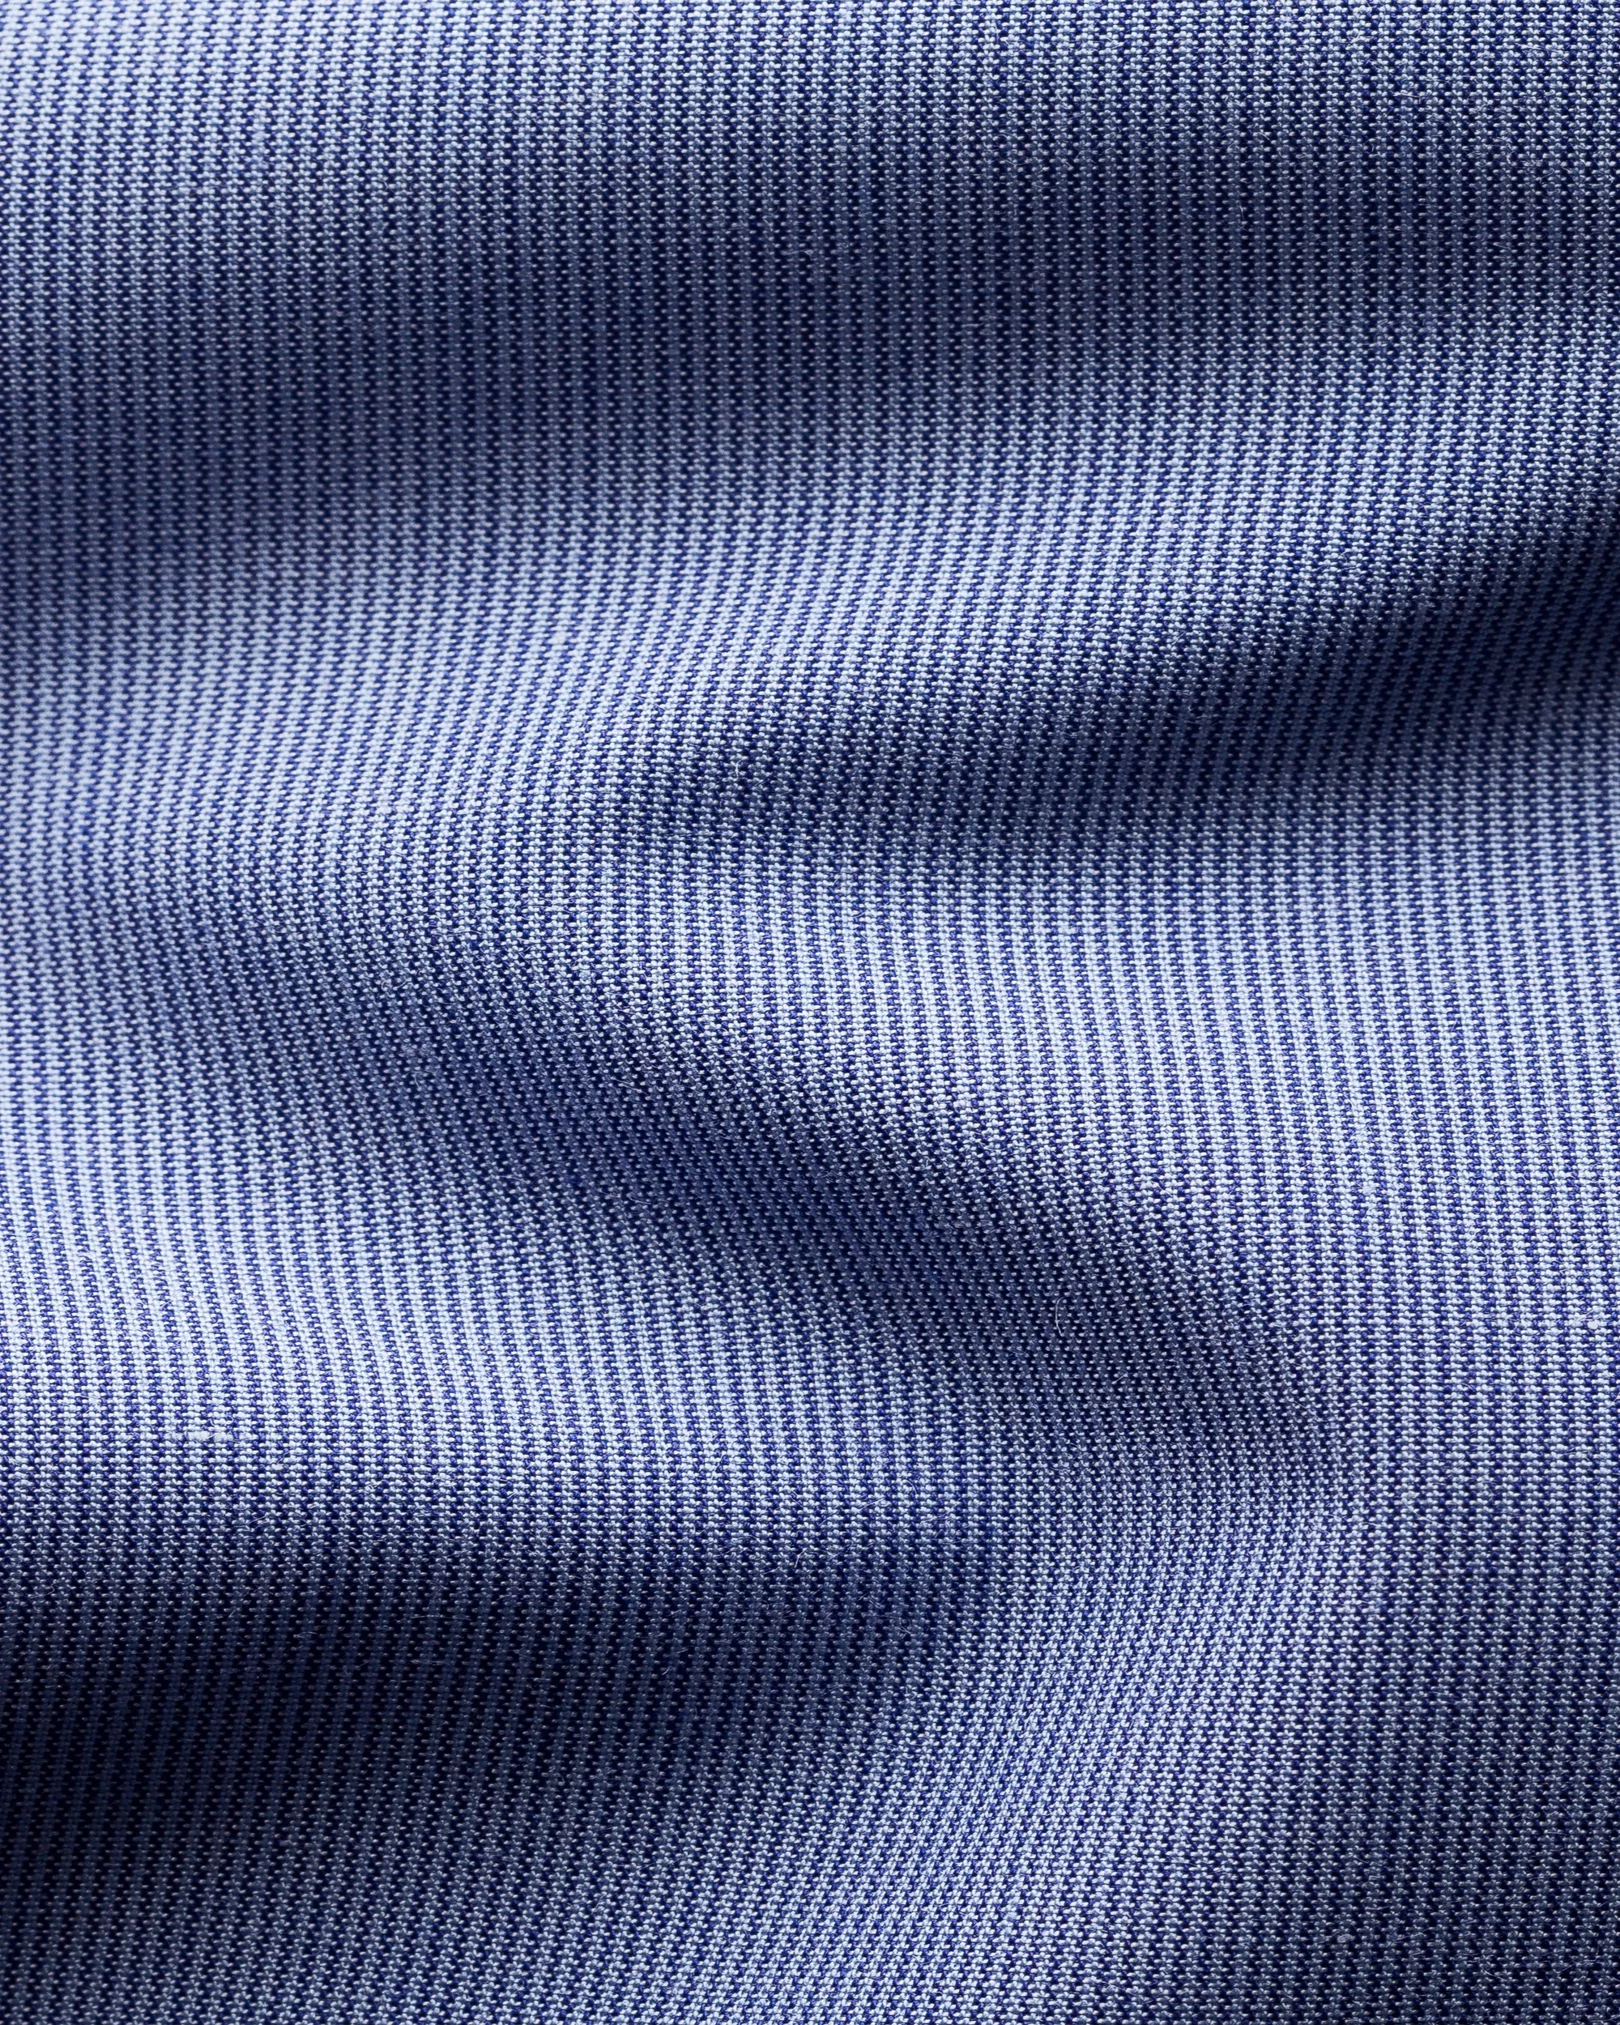 Eton - blue hairline striped shirt navy details